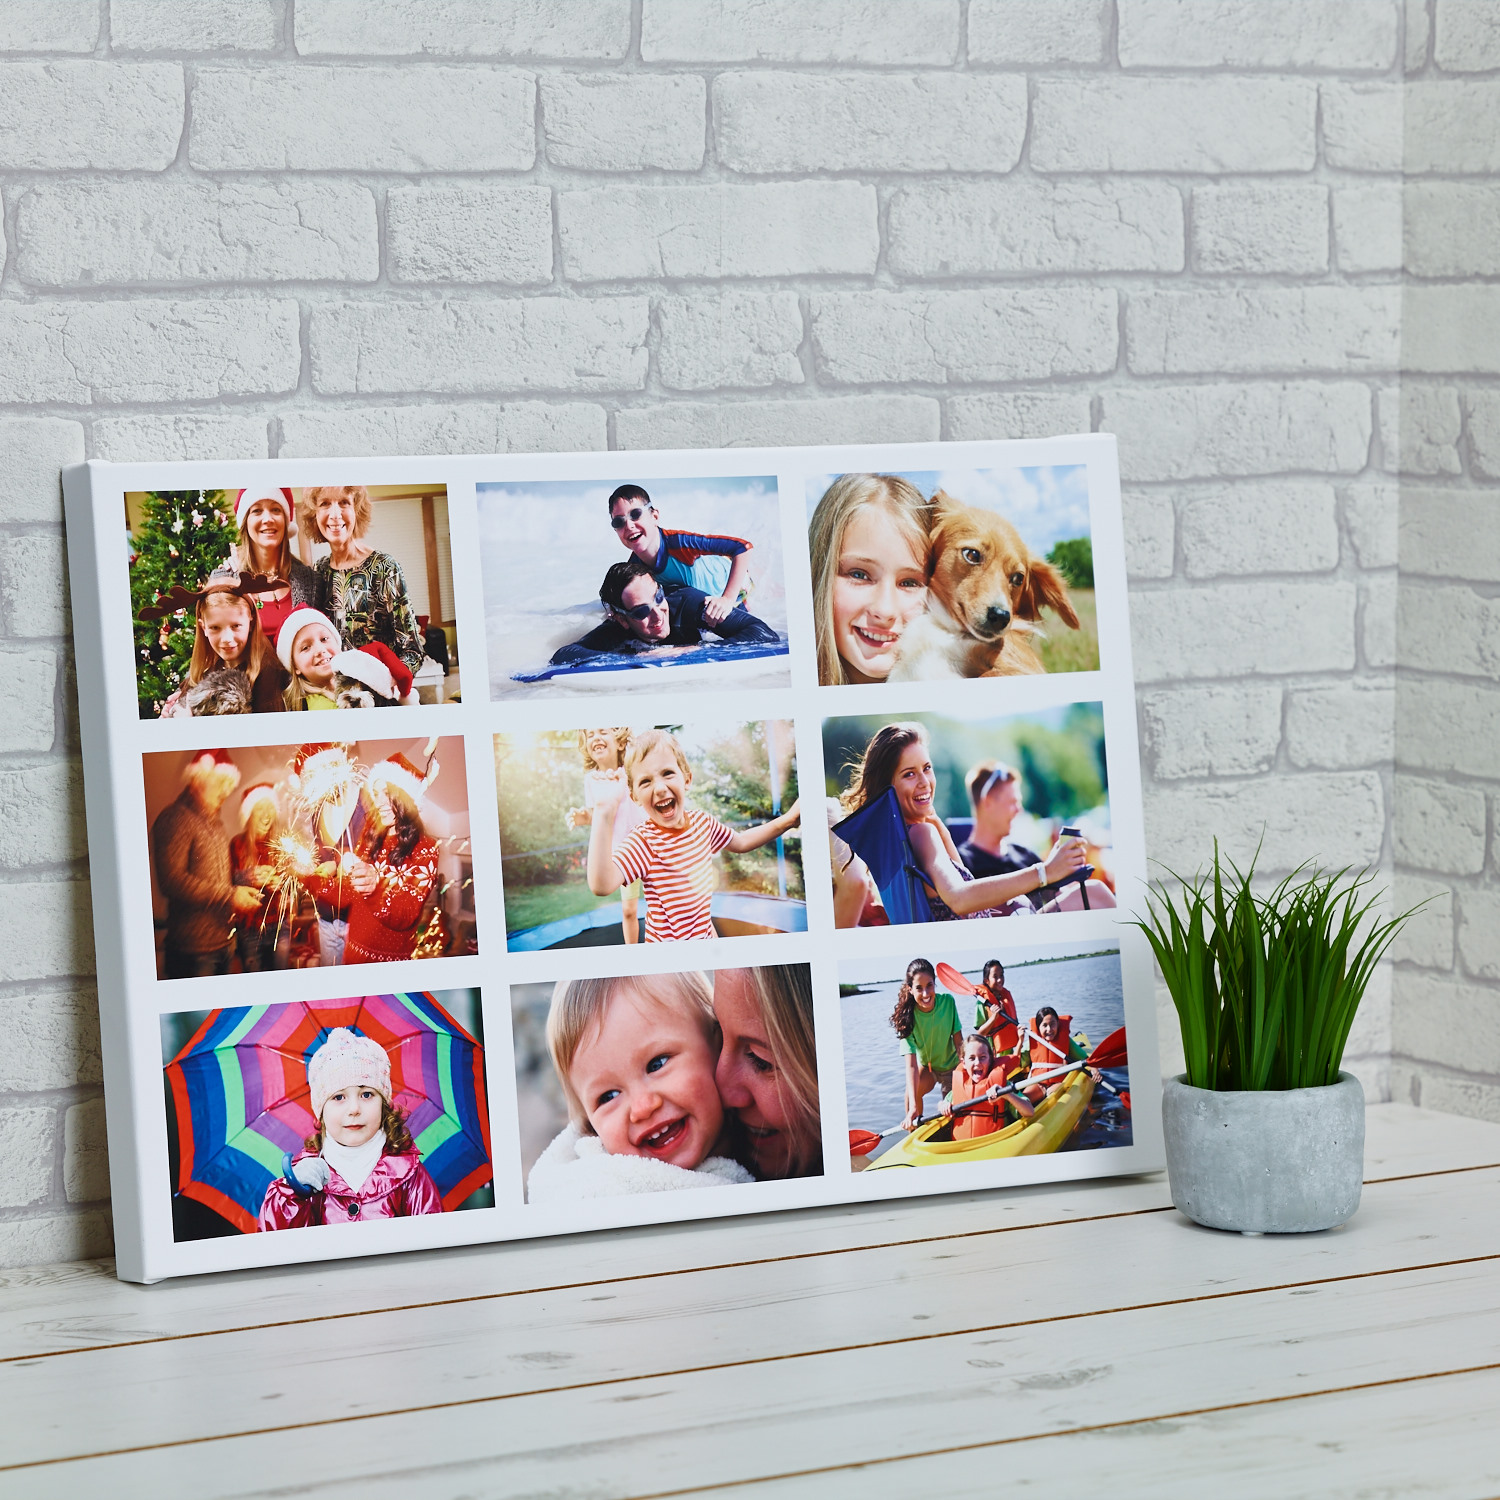 Fantasic personalised love heart shaped photo collage box framed canvas print | eBay